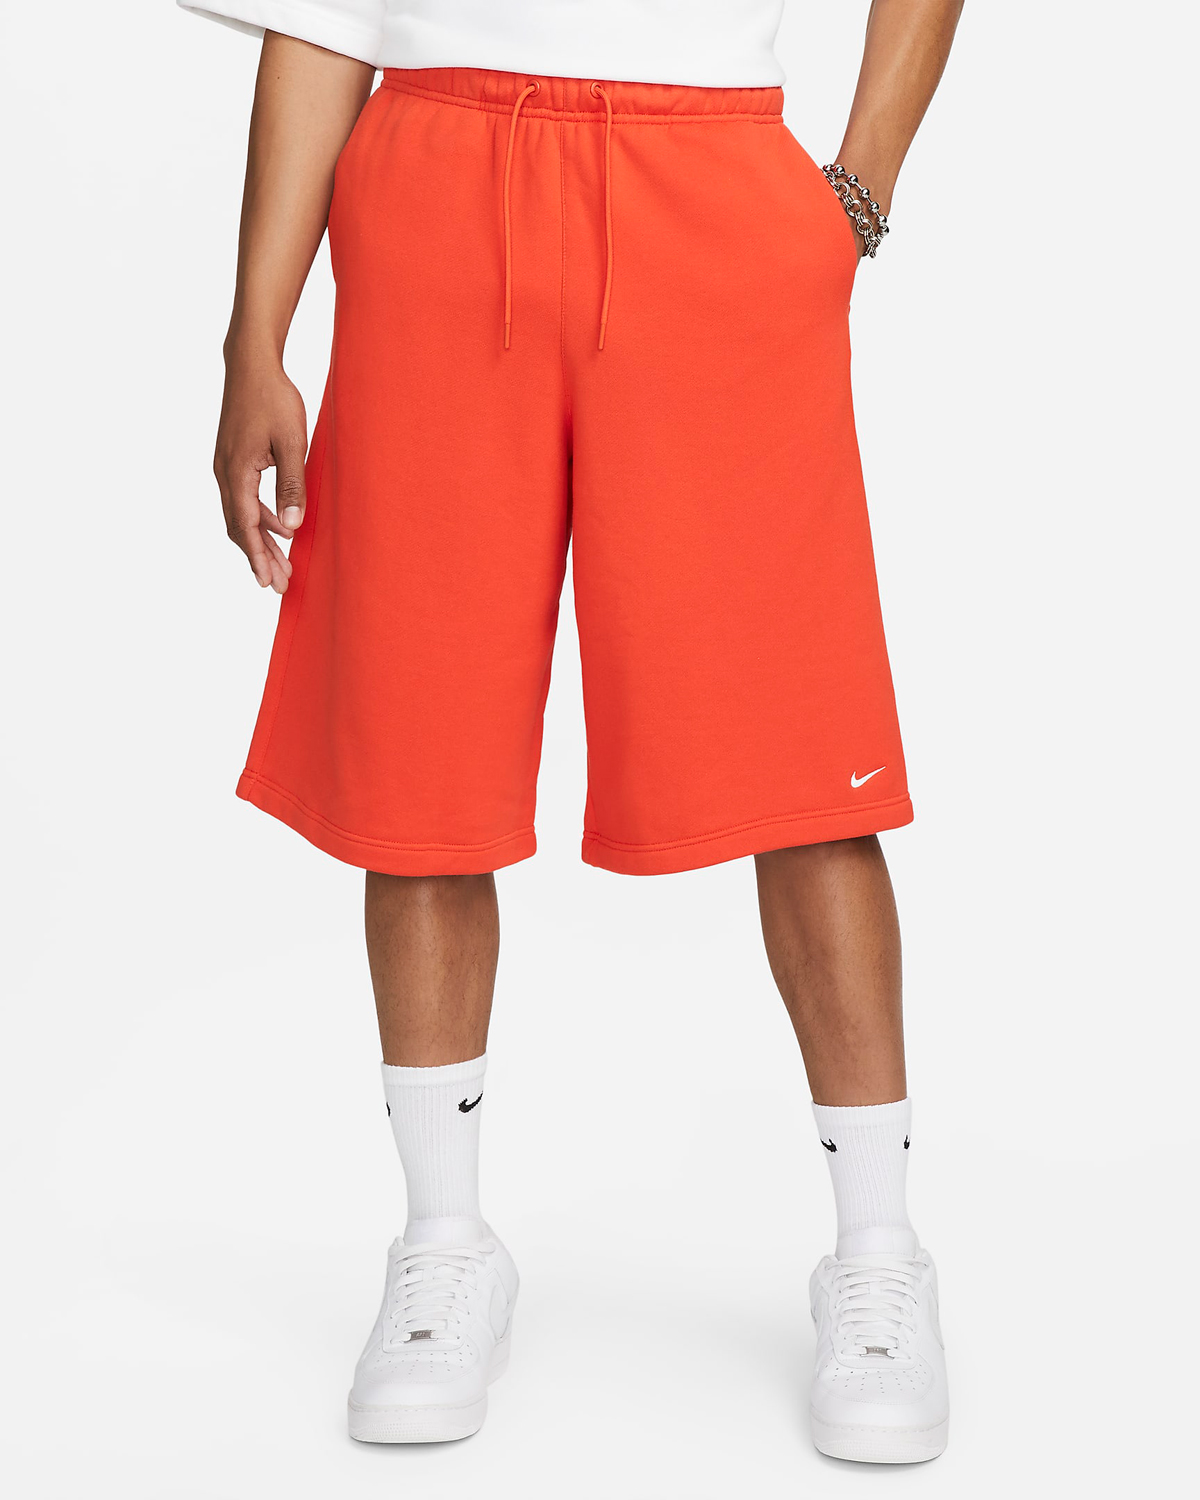 Nike-Sportswear-Circa-Shorts-Picante-Red